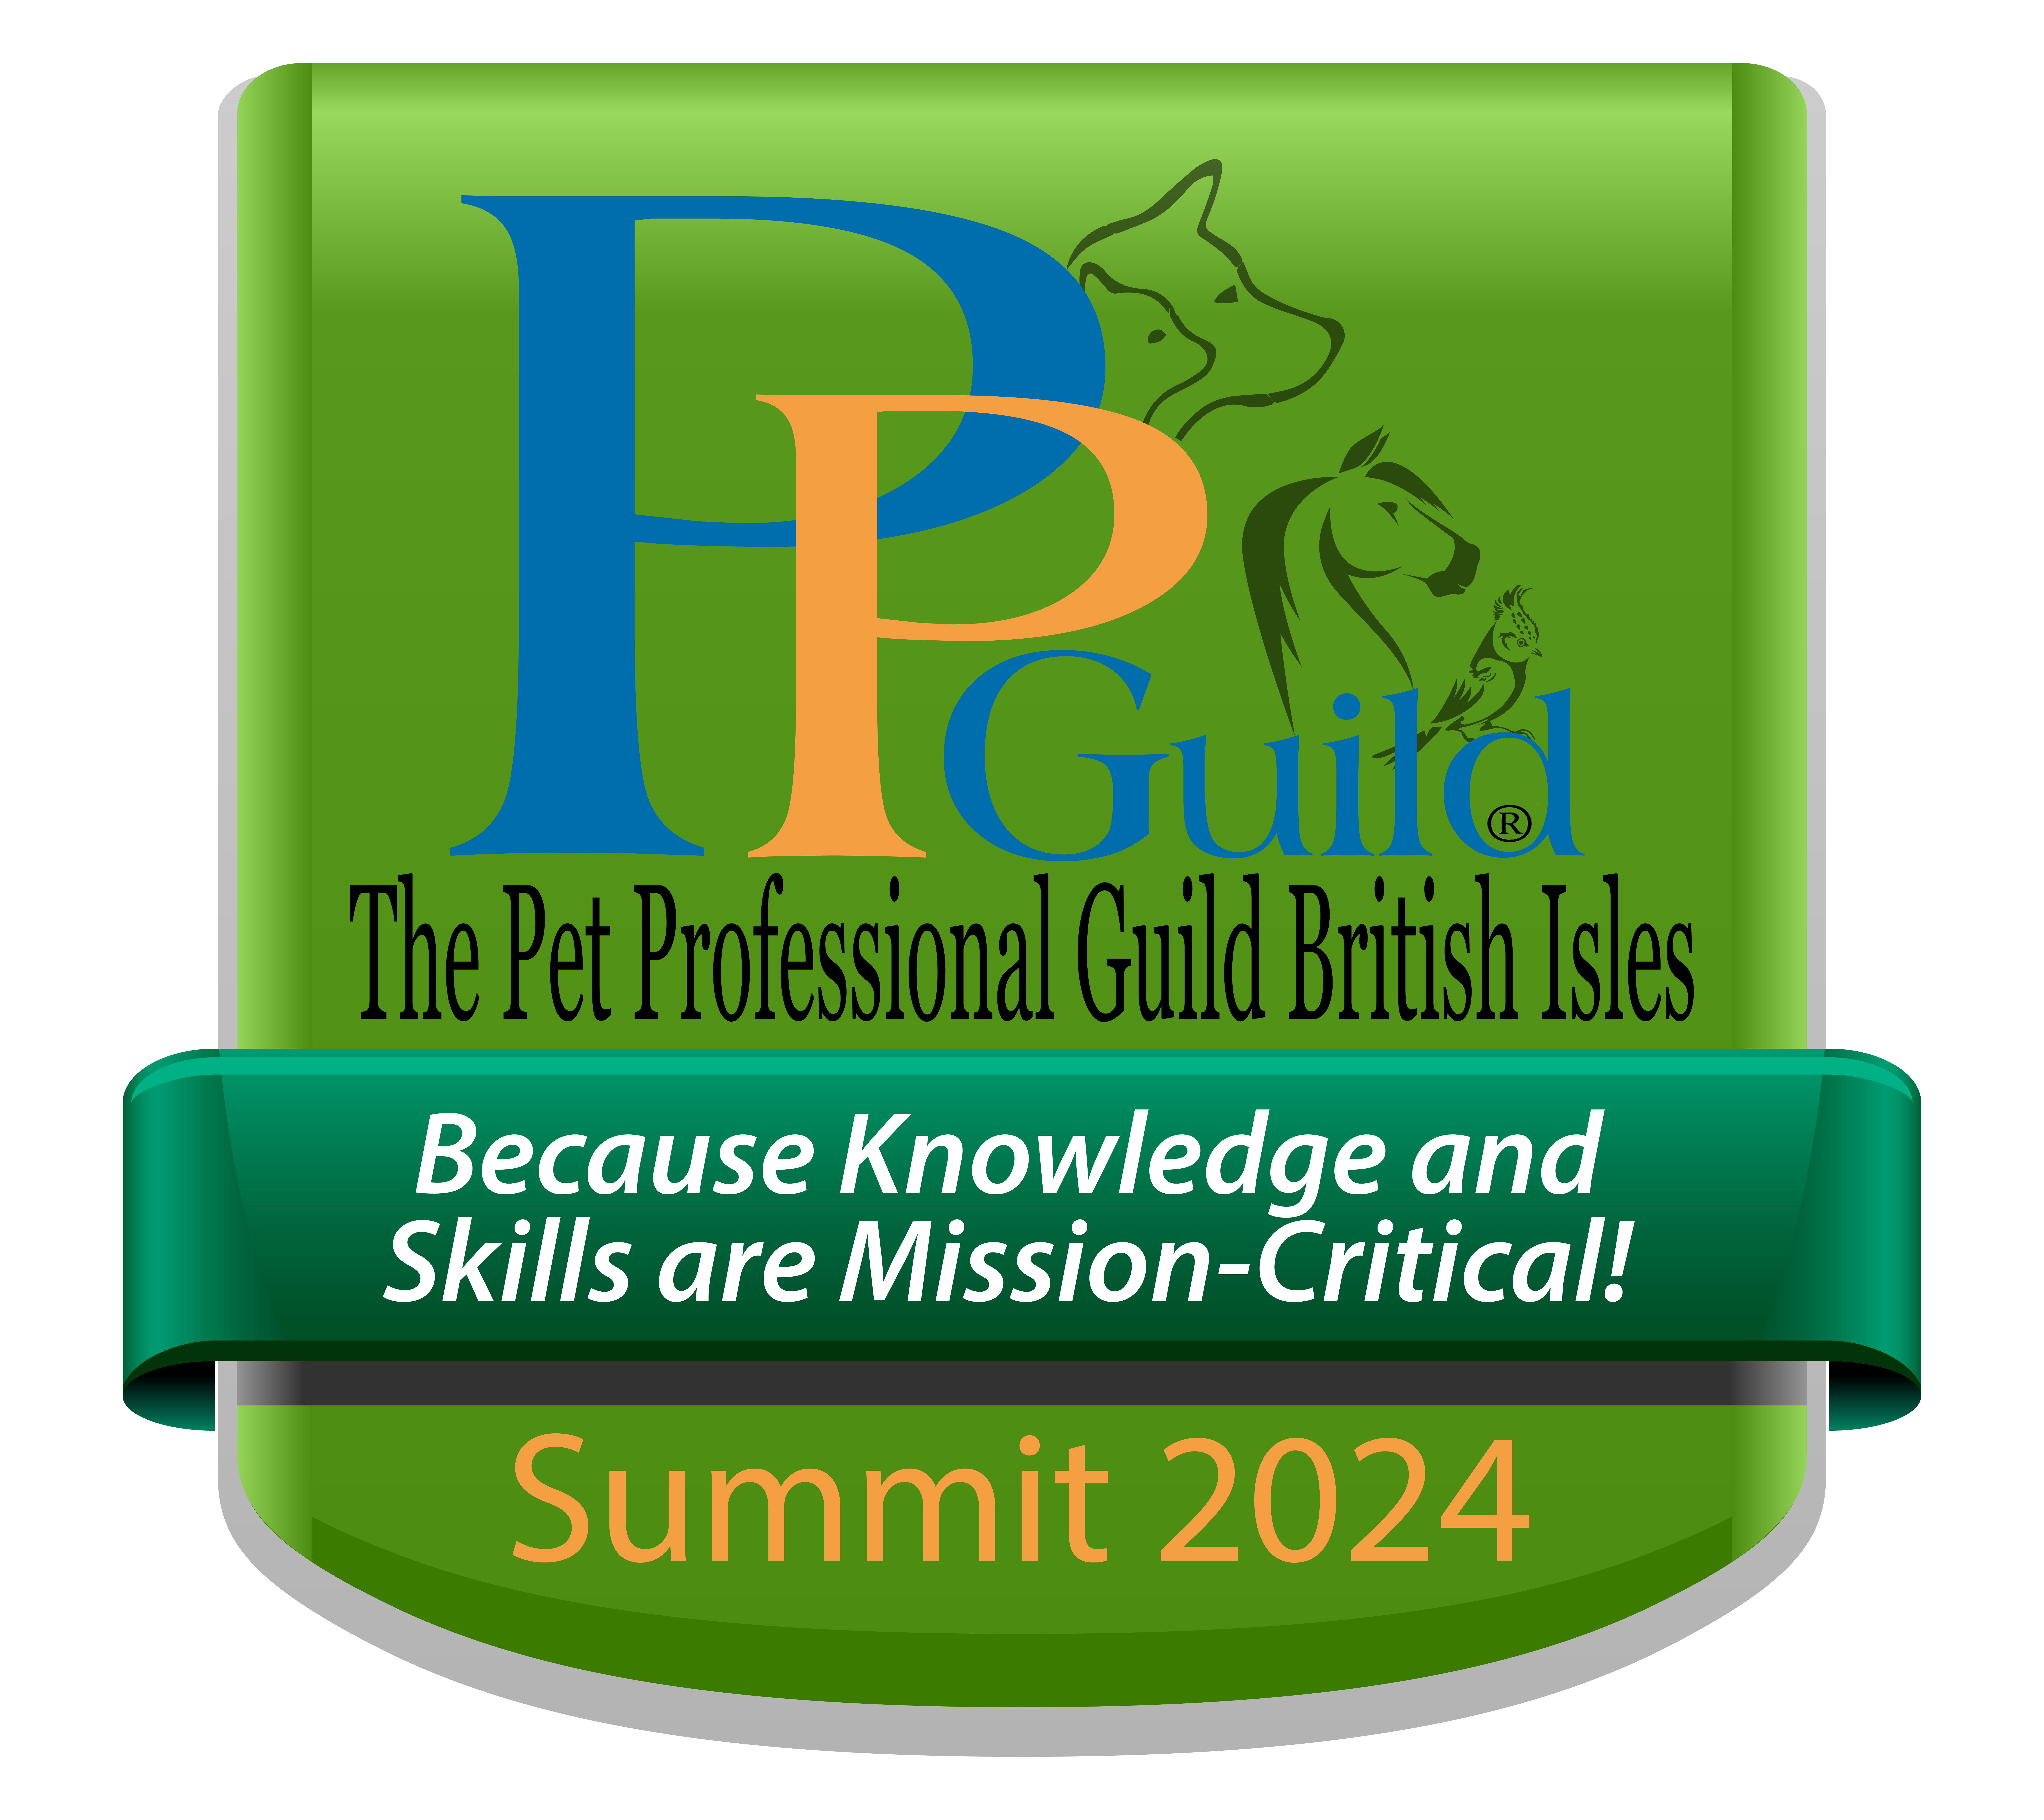 Pet Professional Guild British Isles Summit 2024